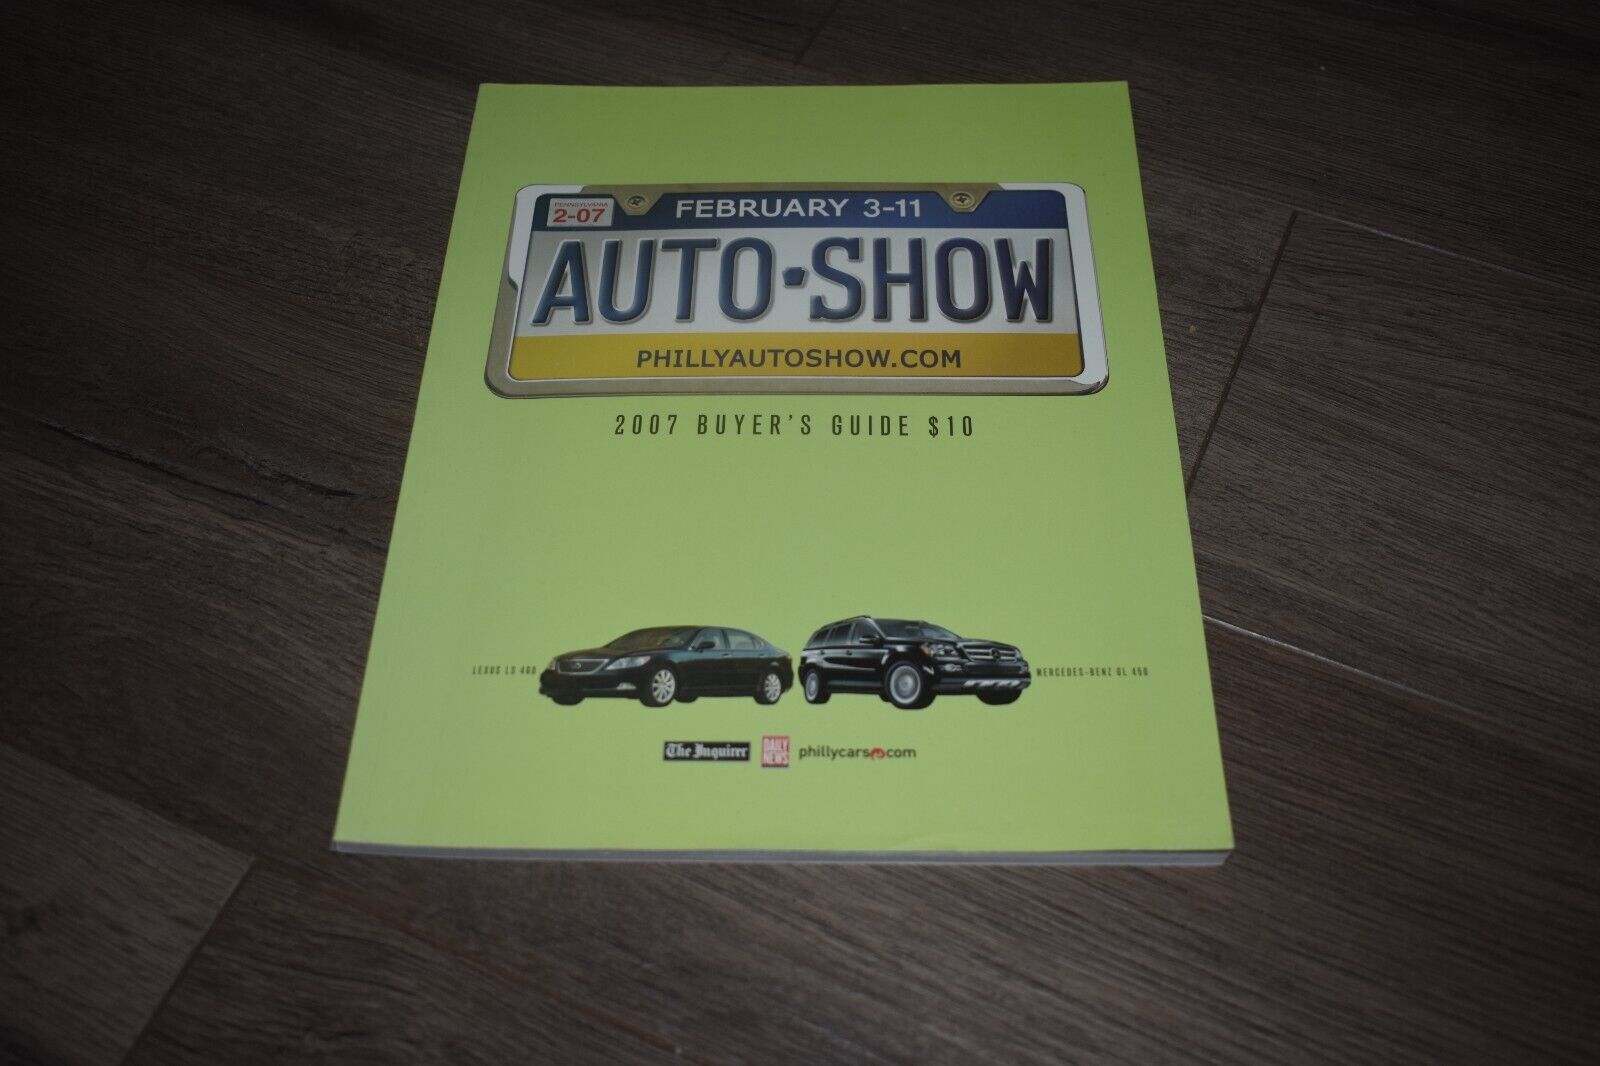 2007 Philadelphia Philly Auto Show Buyer's Guide & Program